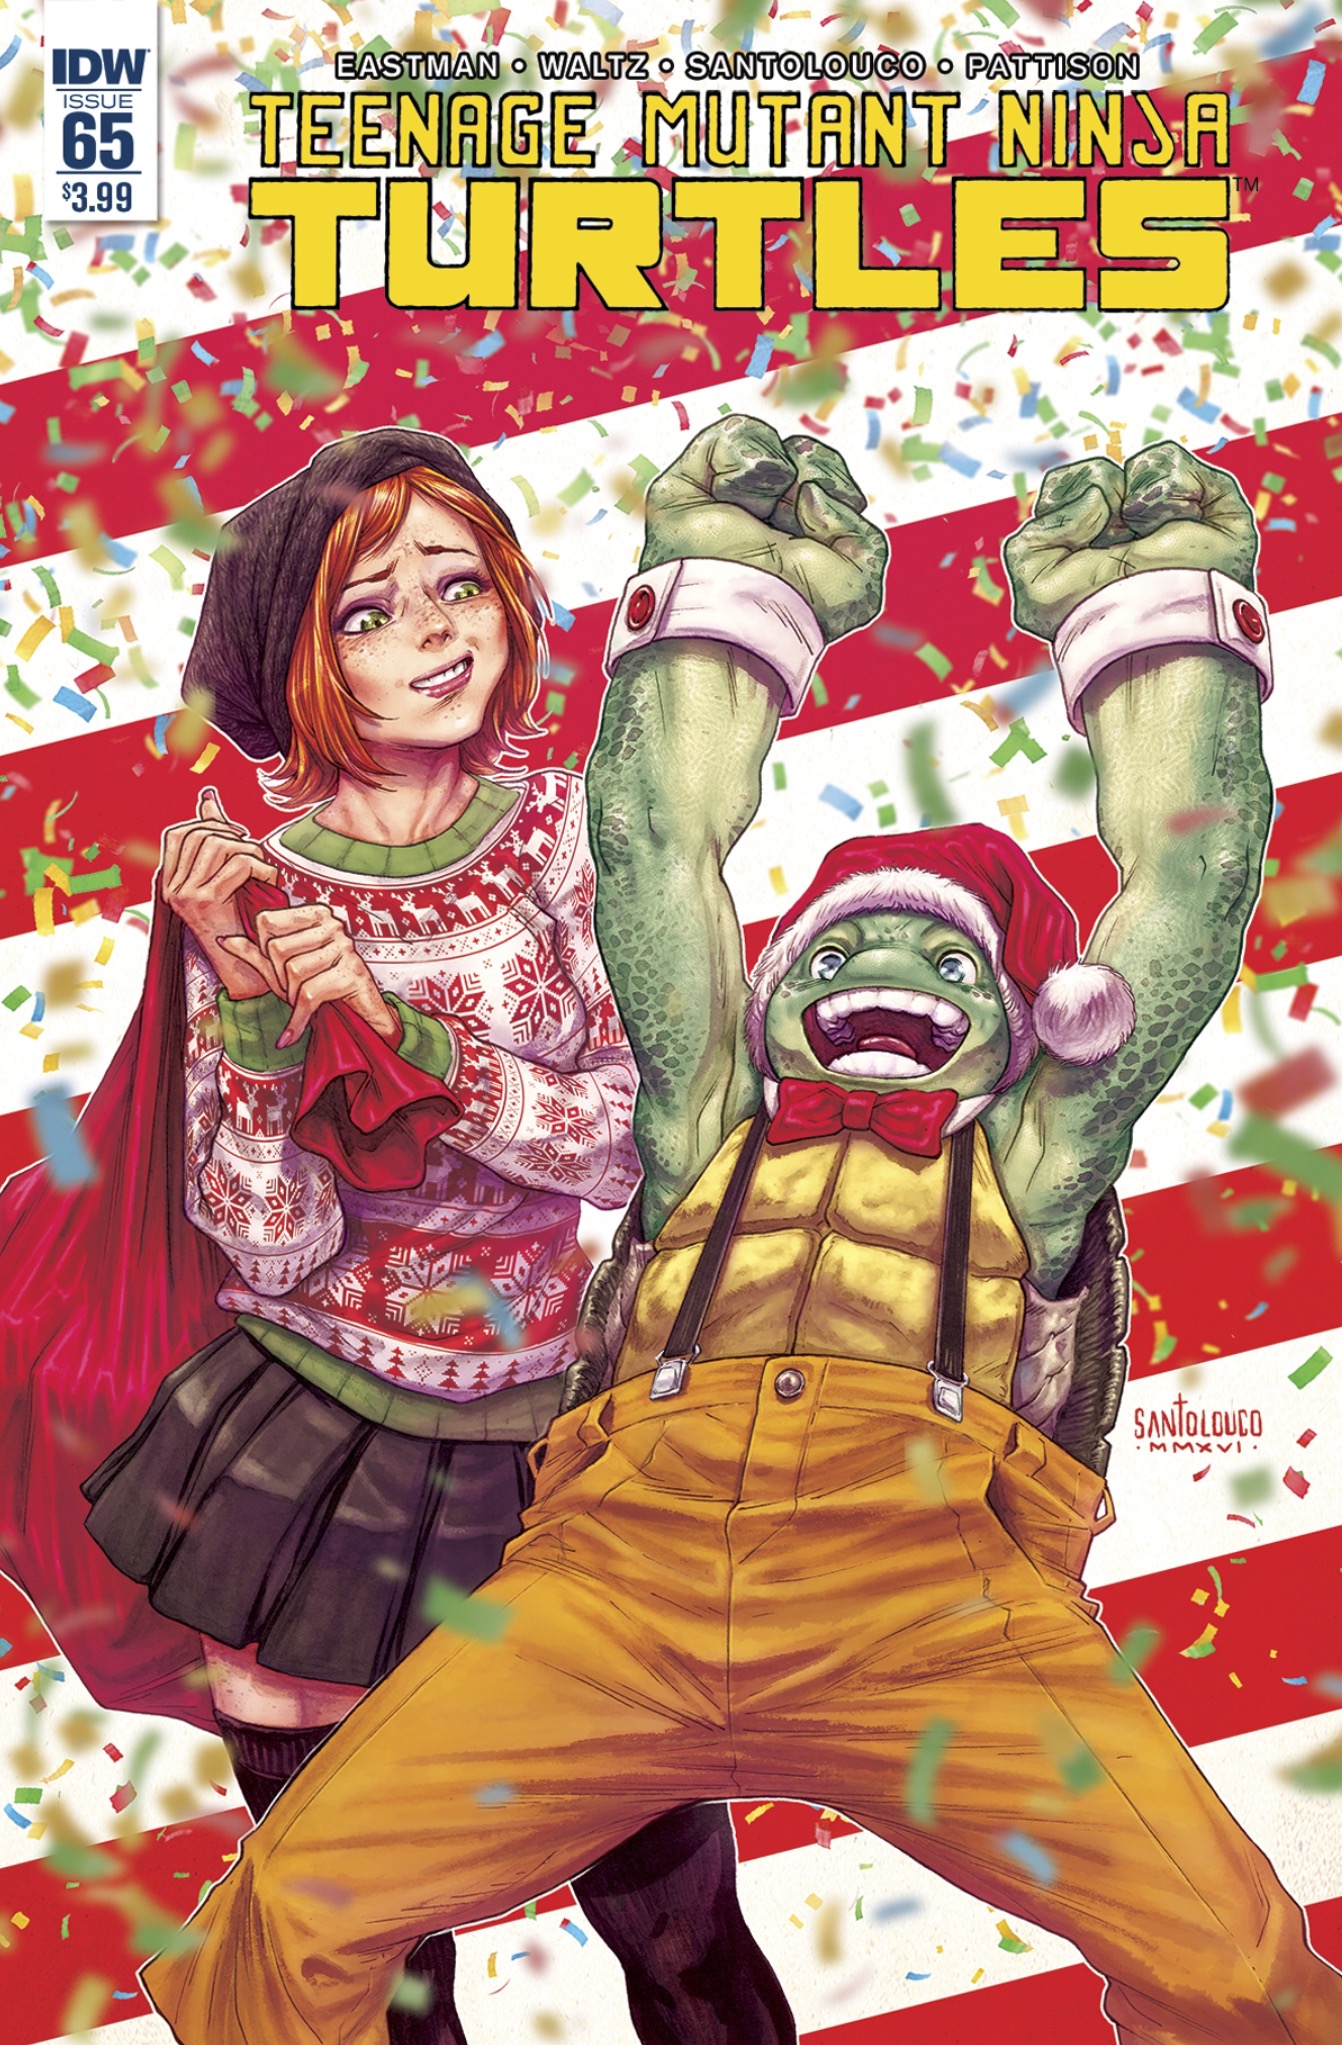 Teenage Mutant Ninja Turtles #65 Review